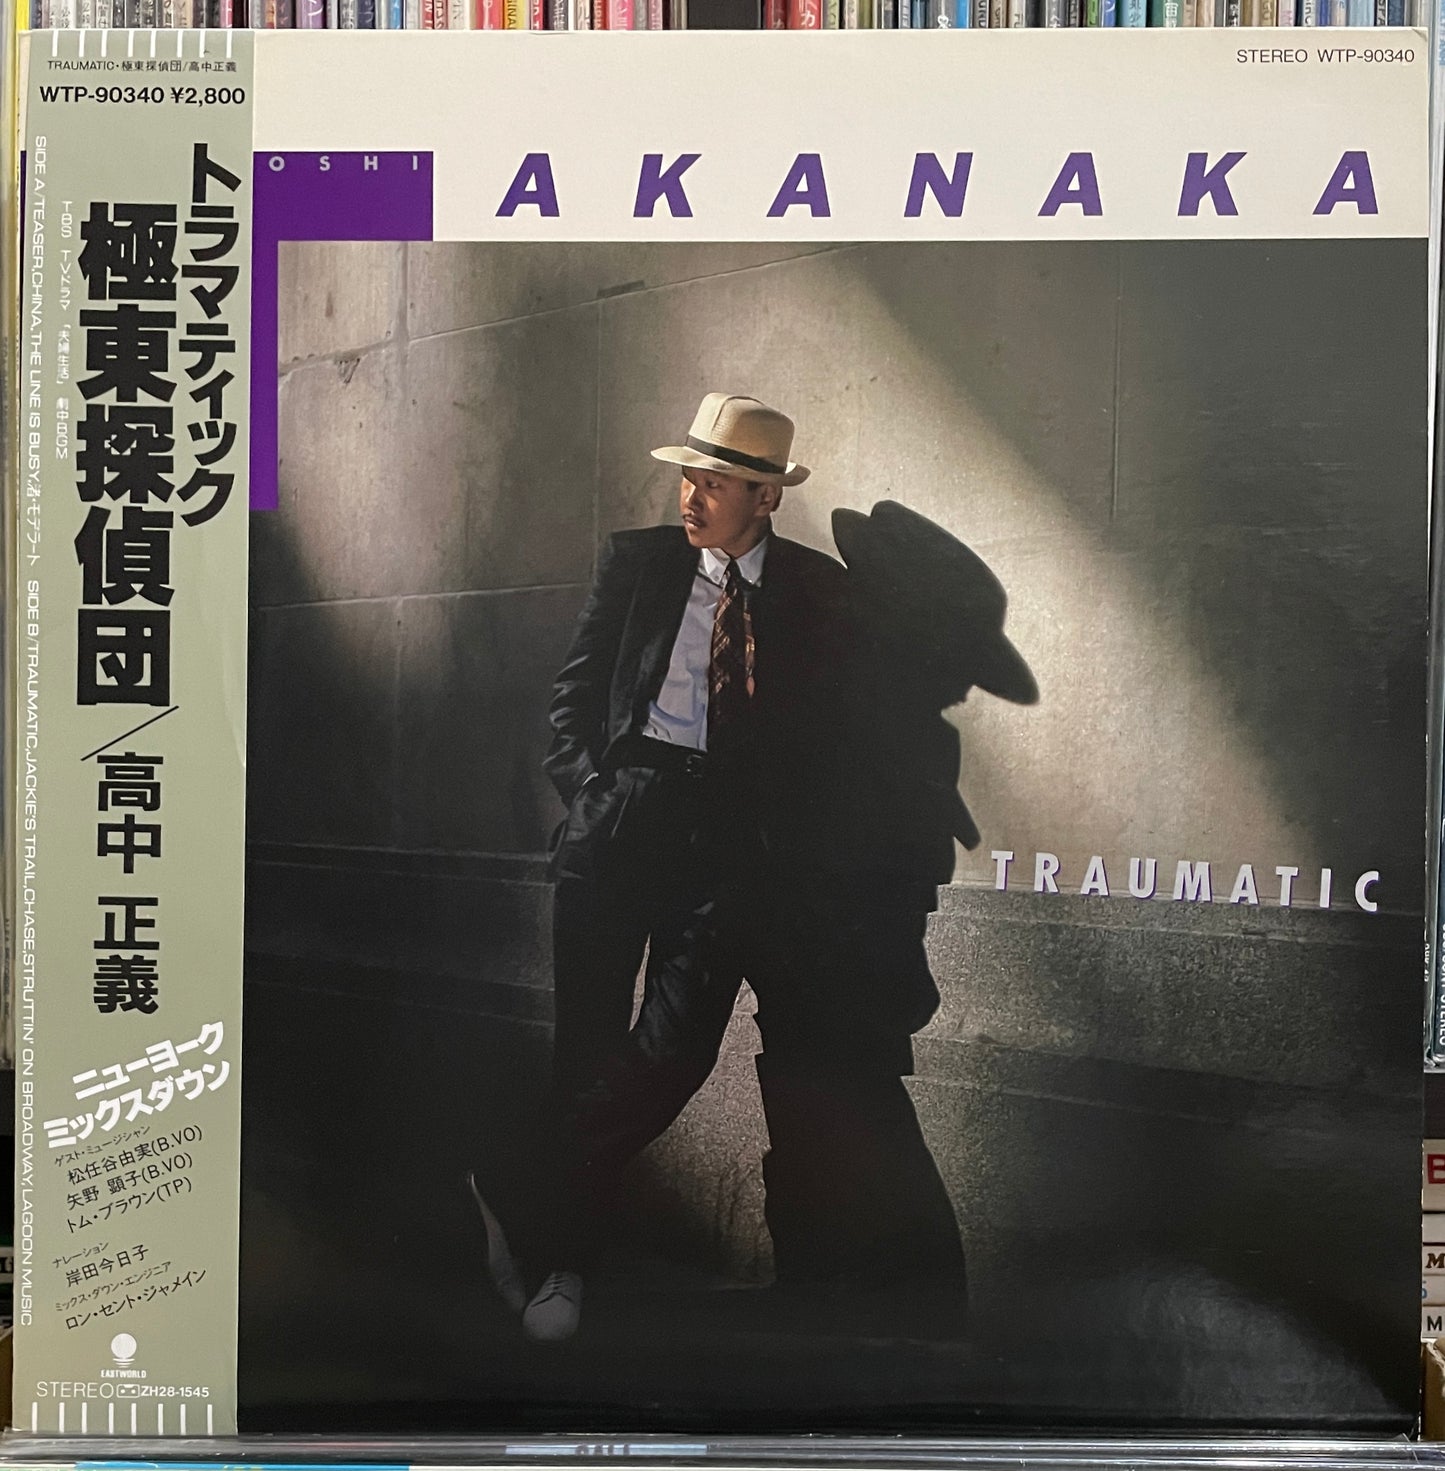 Masayoshi Takanaka “Traumatic” (1985)